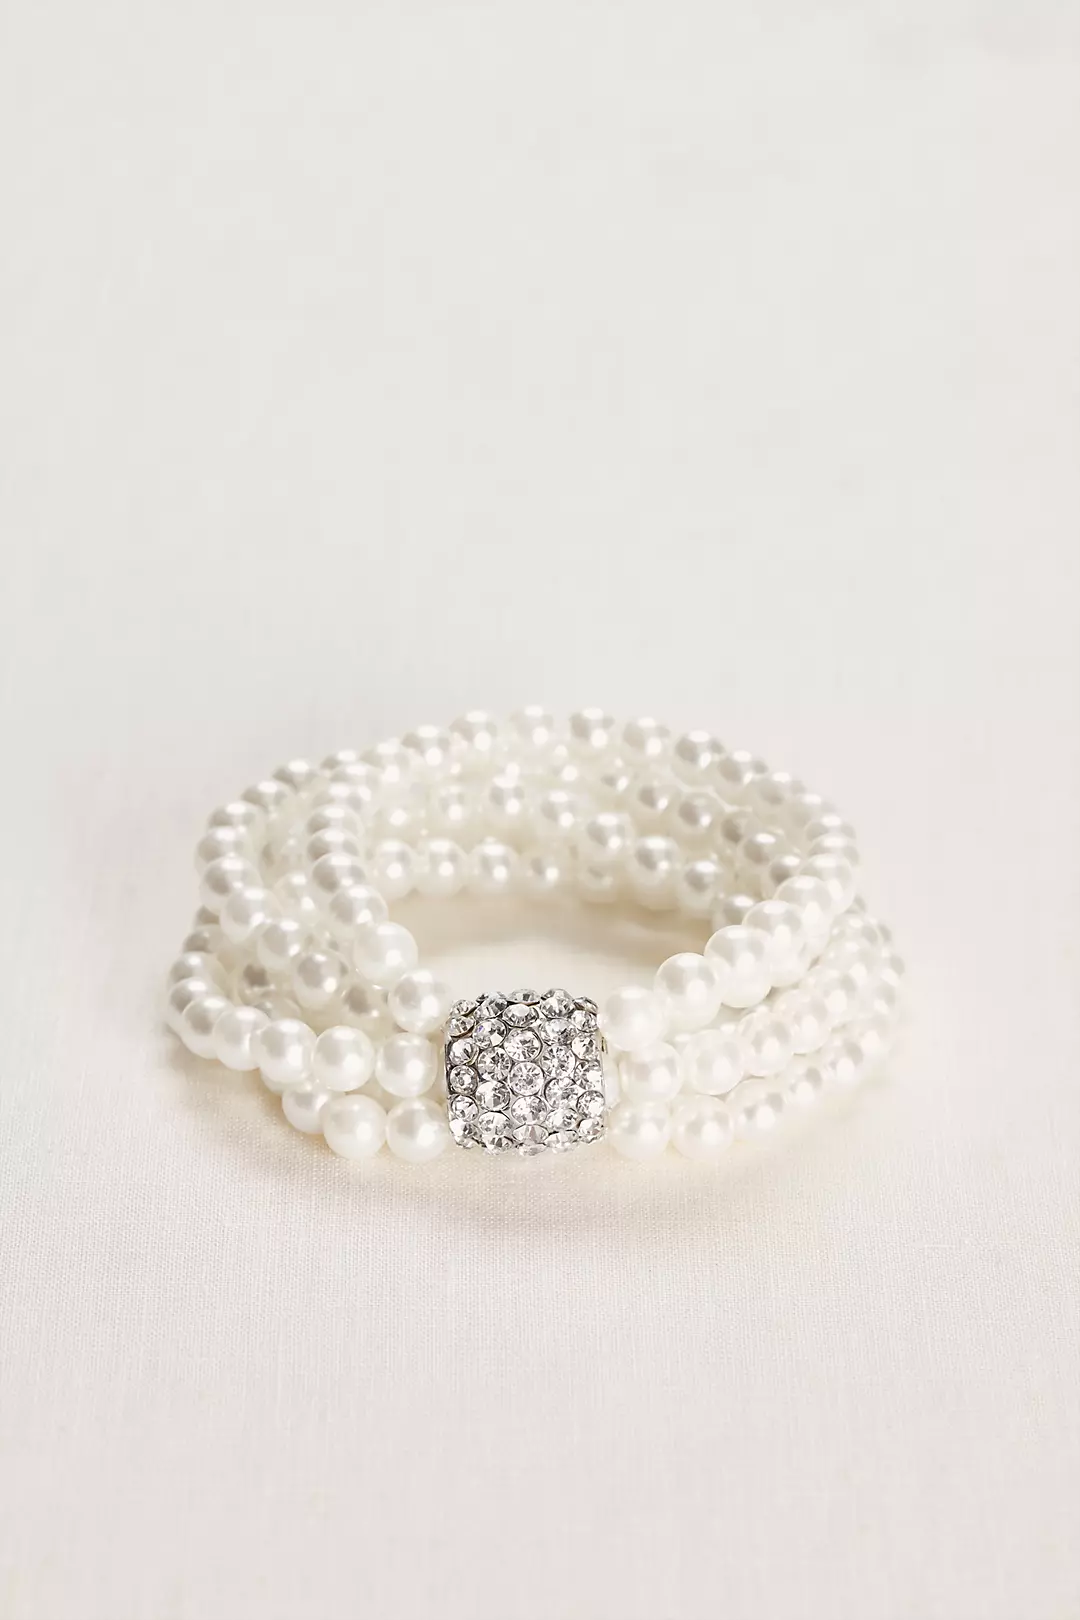 Multiple Strand Pearl and Crystal Bracelet Image